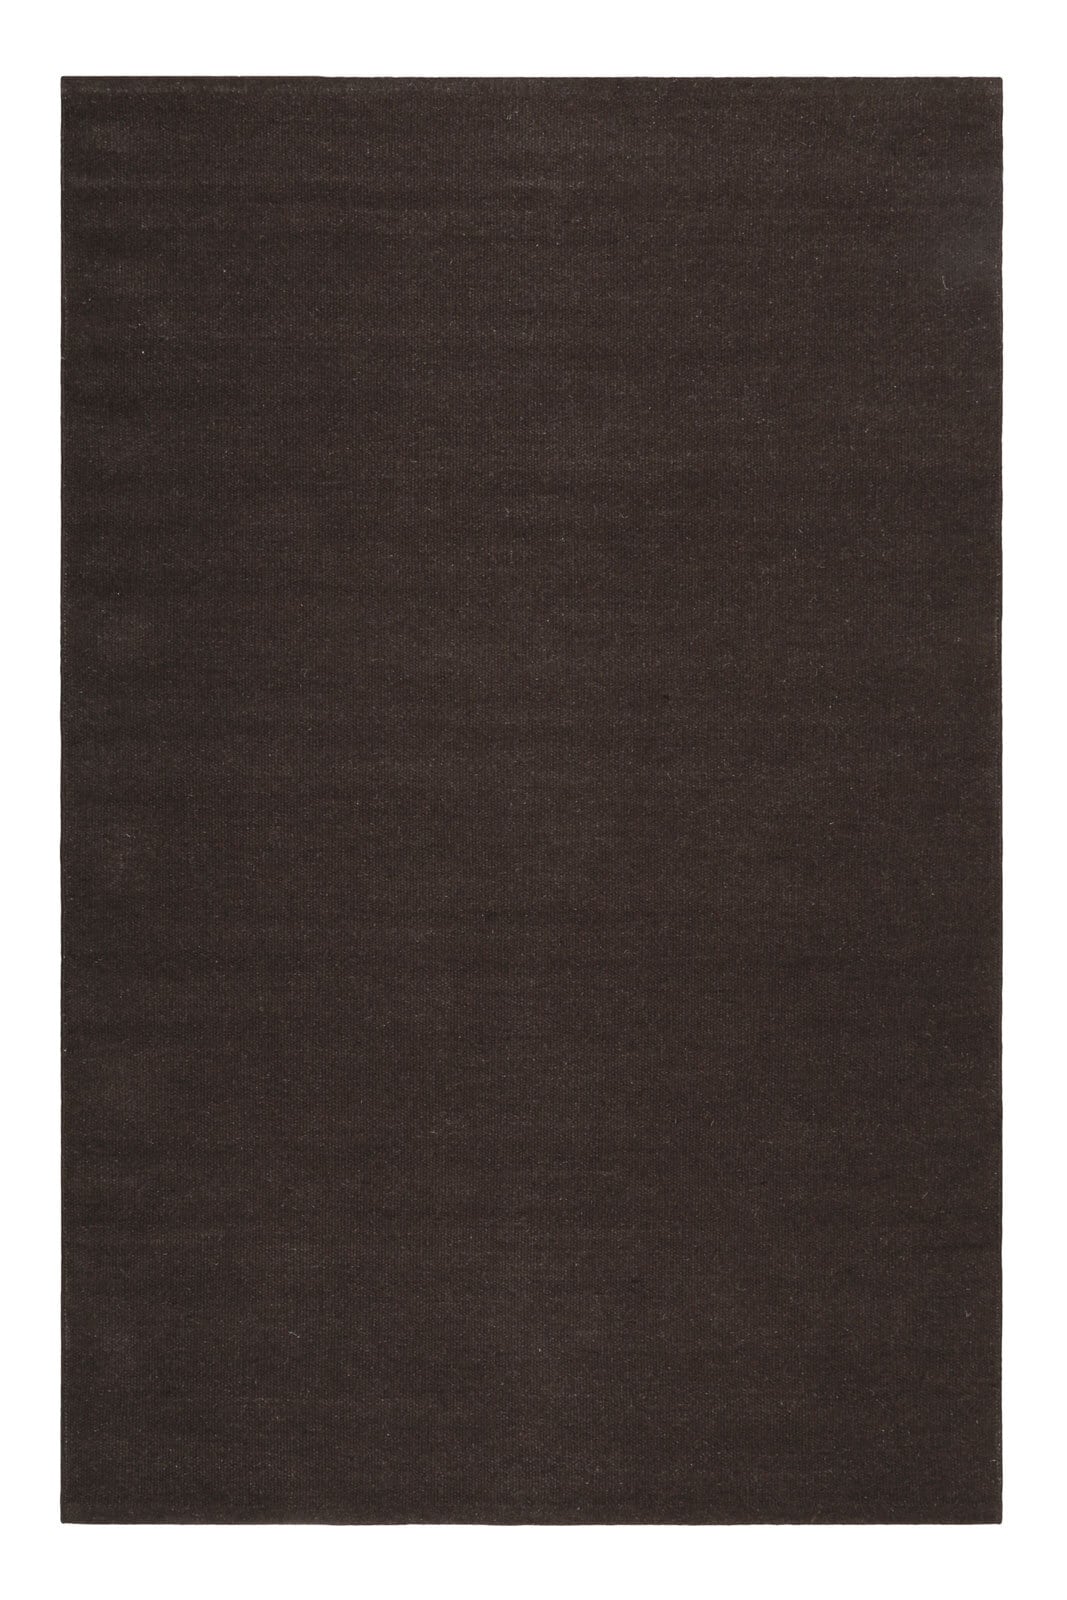 ESPRIT Kelim-Teppich MAYA 160 x 230 cm braun